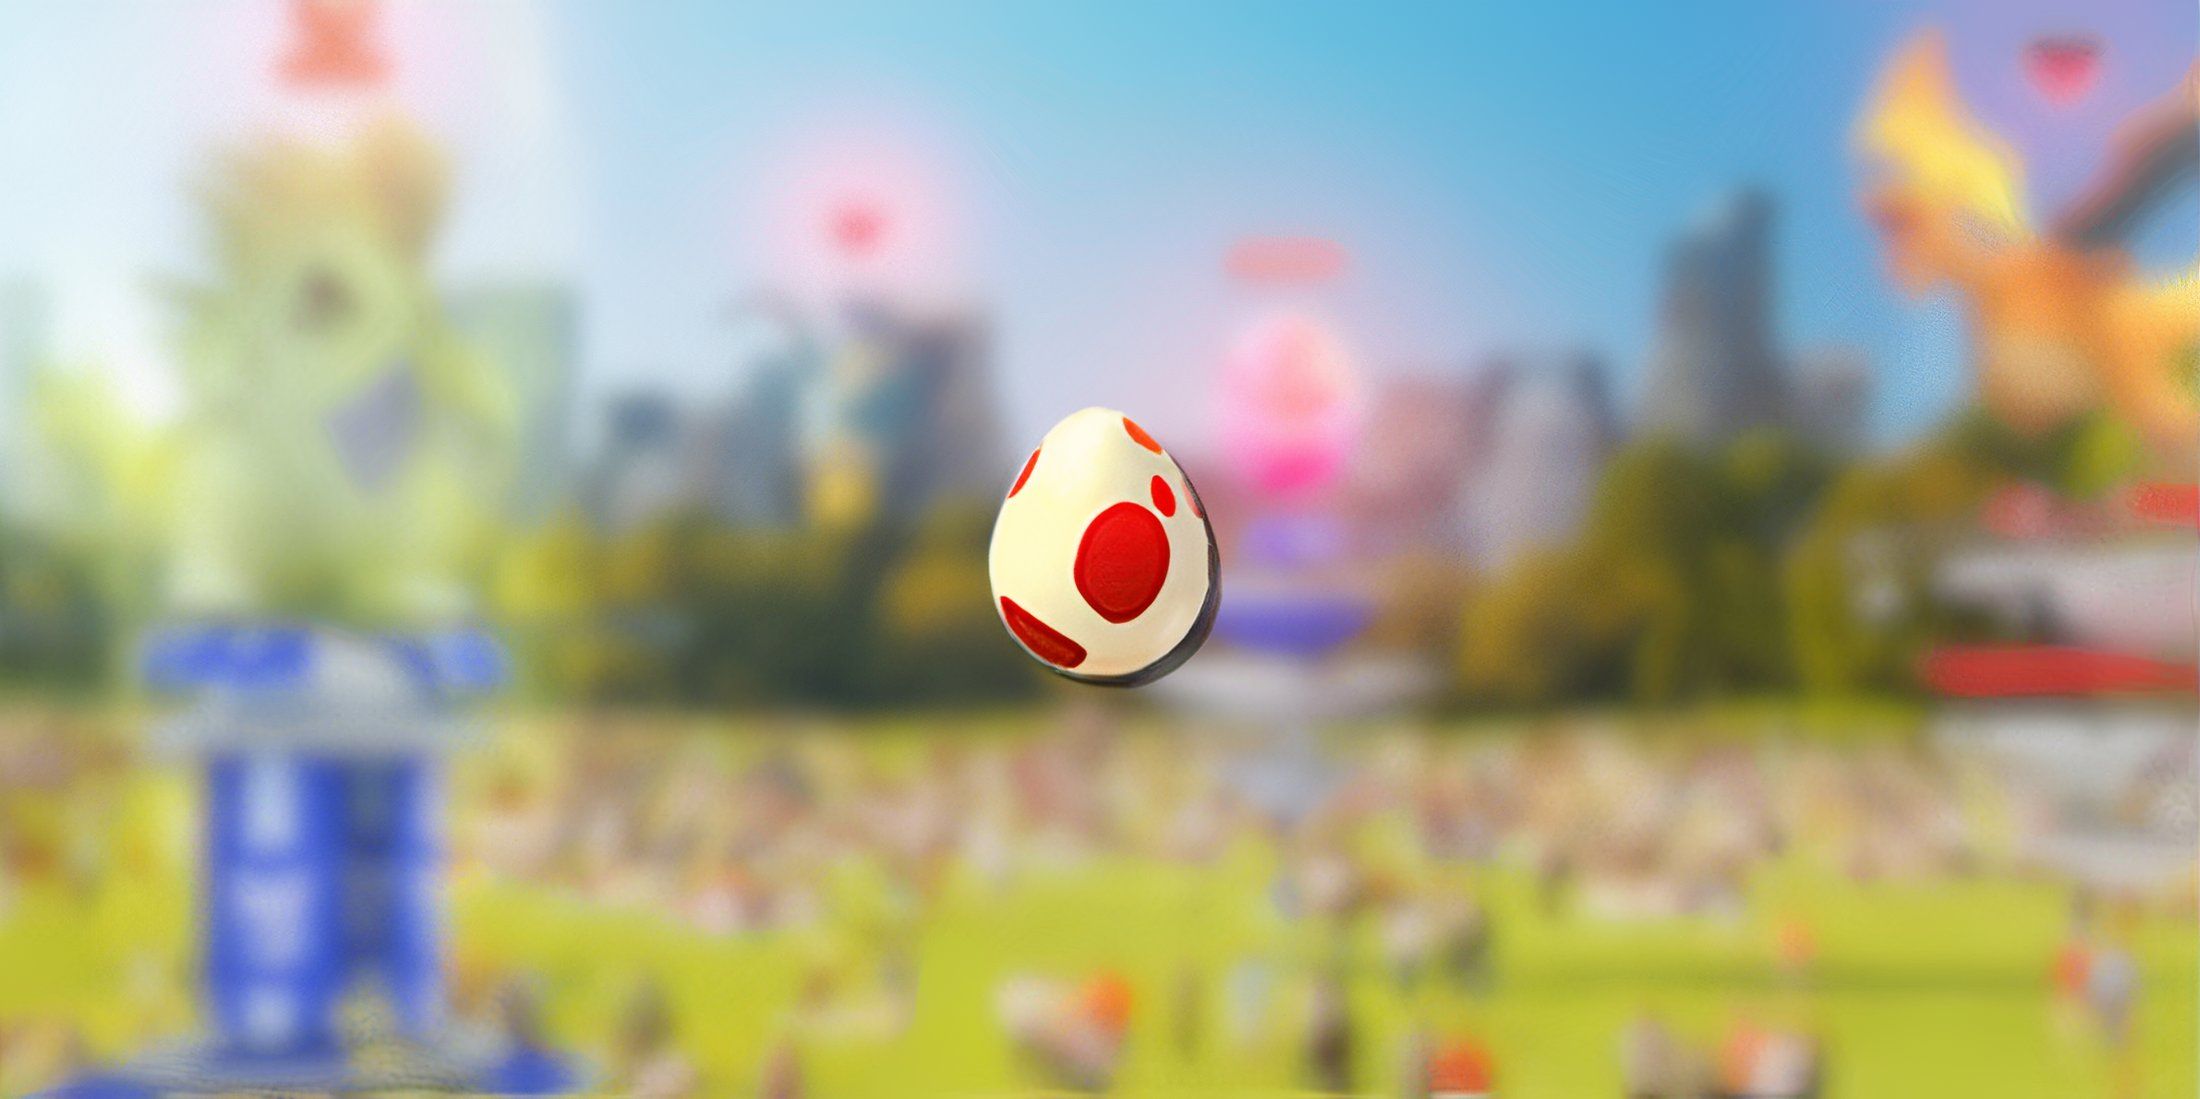 Image of a Strange Red Egg in Pokemon GO